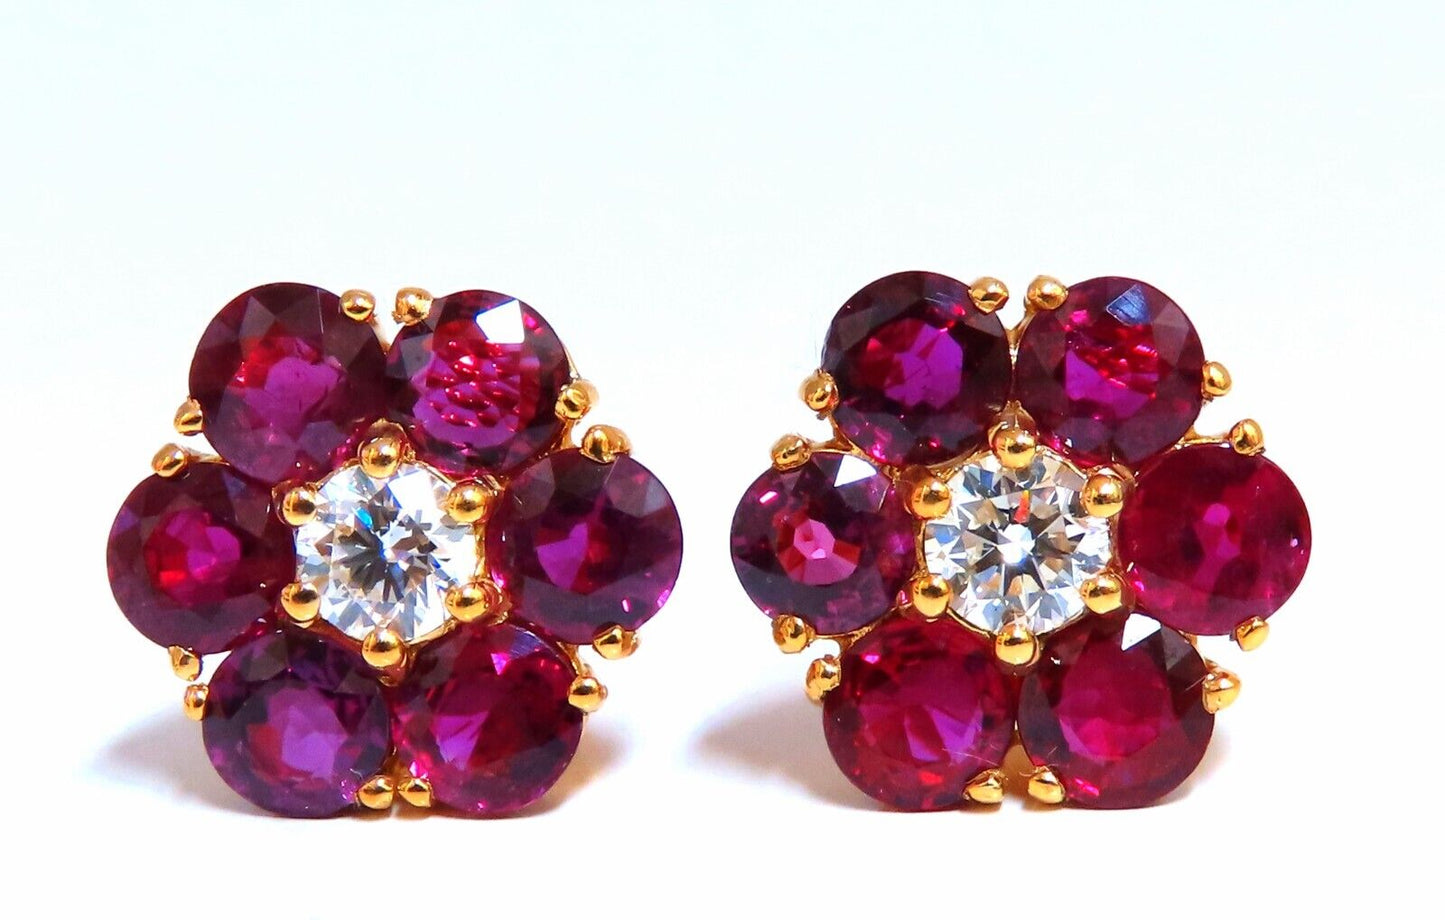 6.12ct Natural Ruby Diamonds Cluster Stud Earrings 14kt